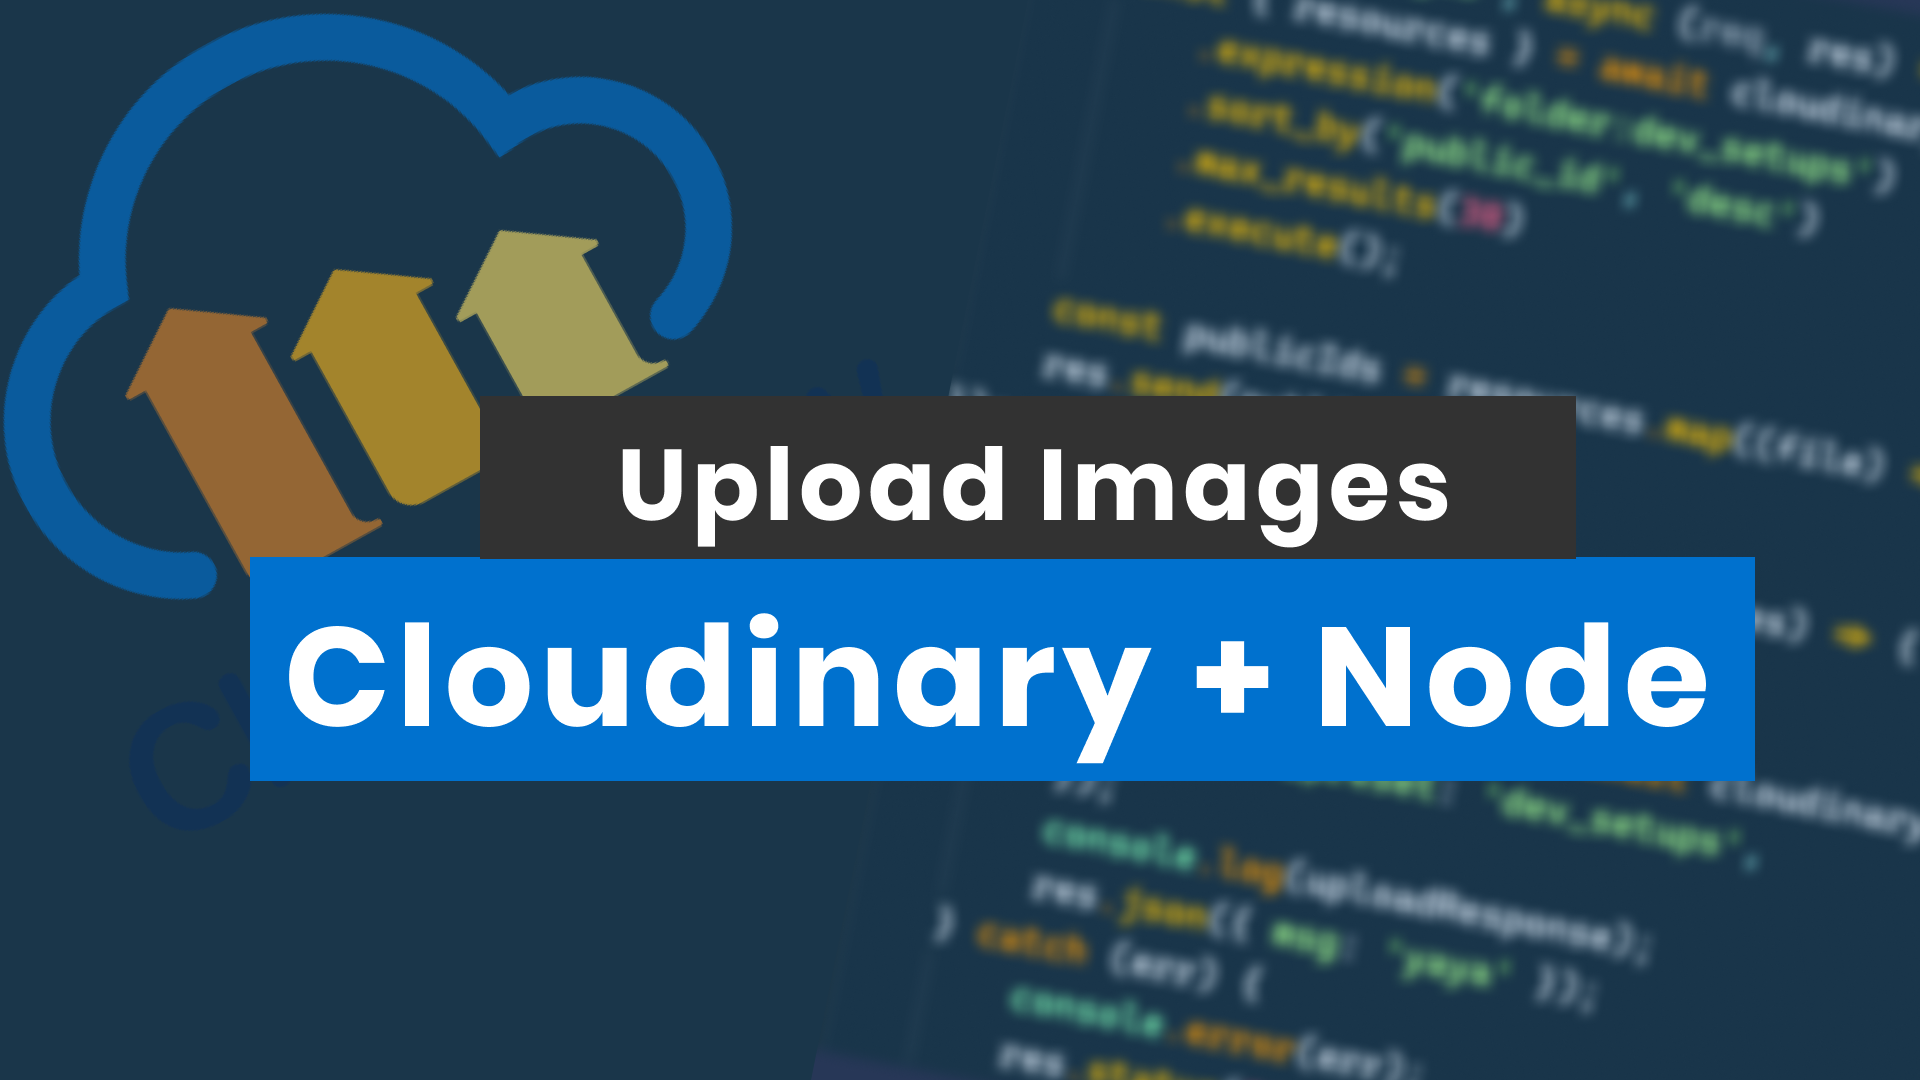 Cloudinary Image Upload with Nodejs